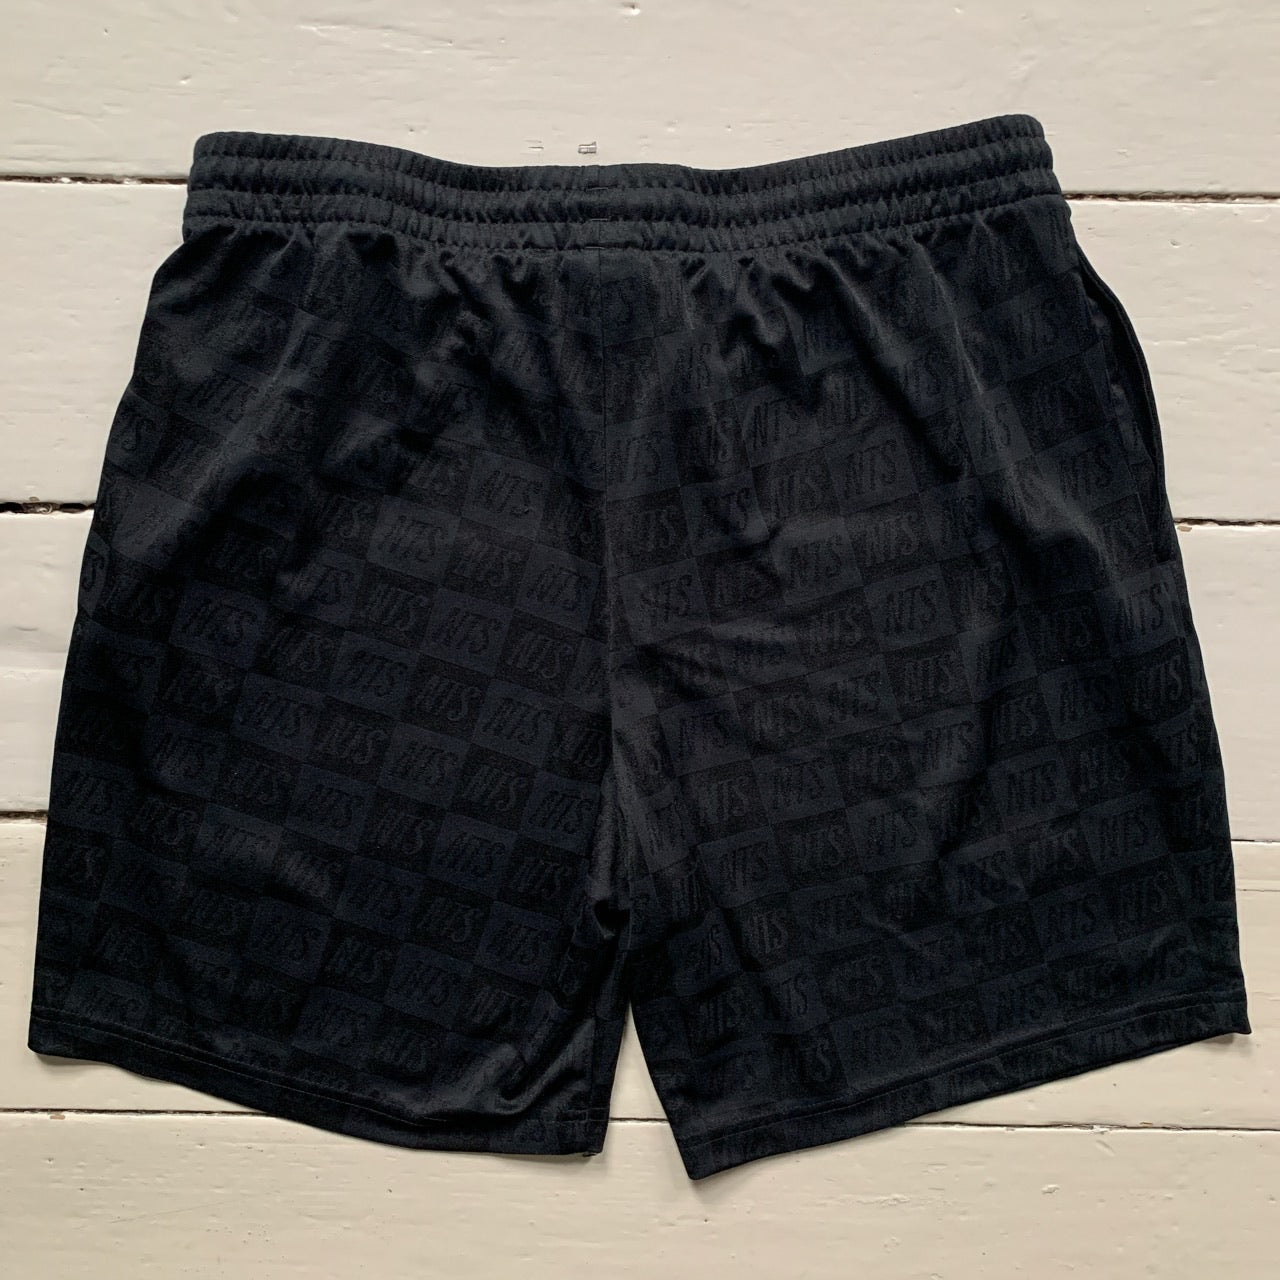 Adidas NTS Home Shorts Black (Large)